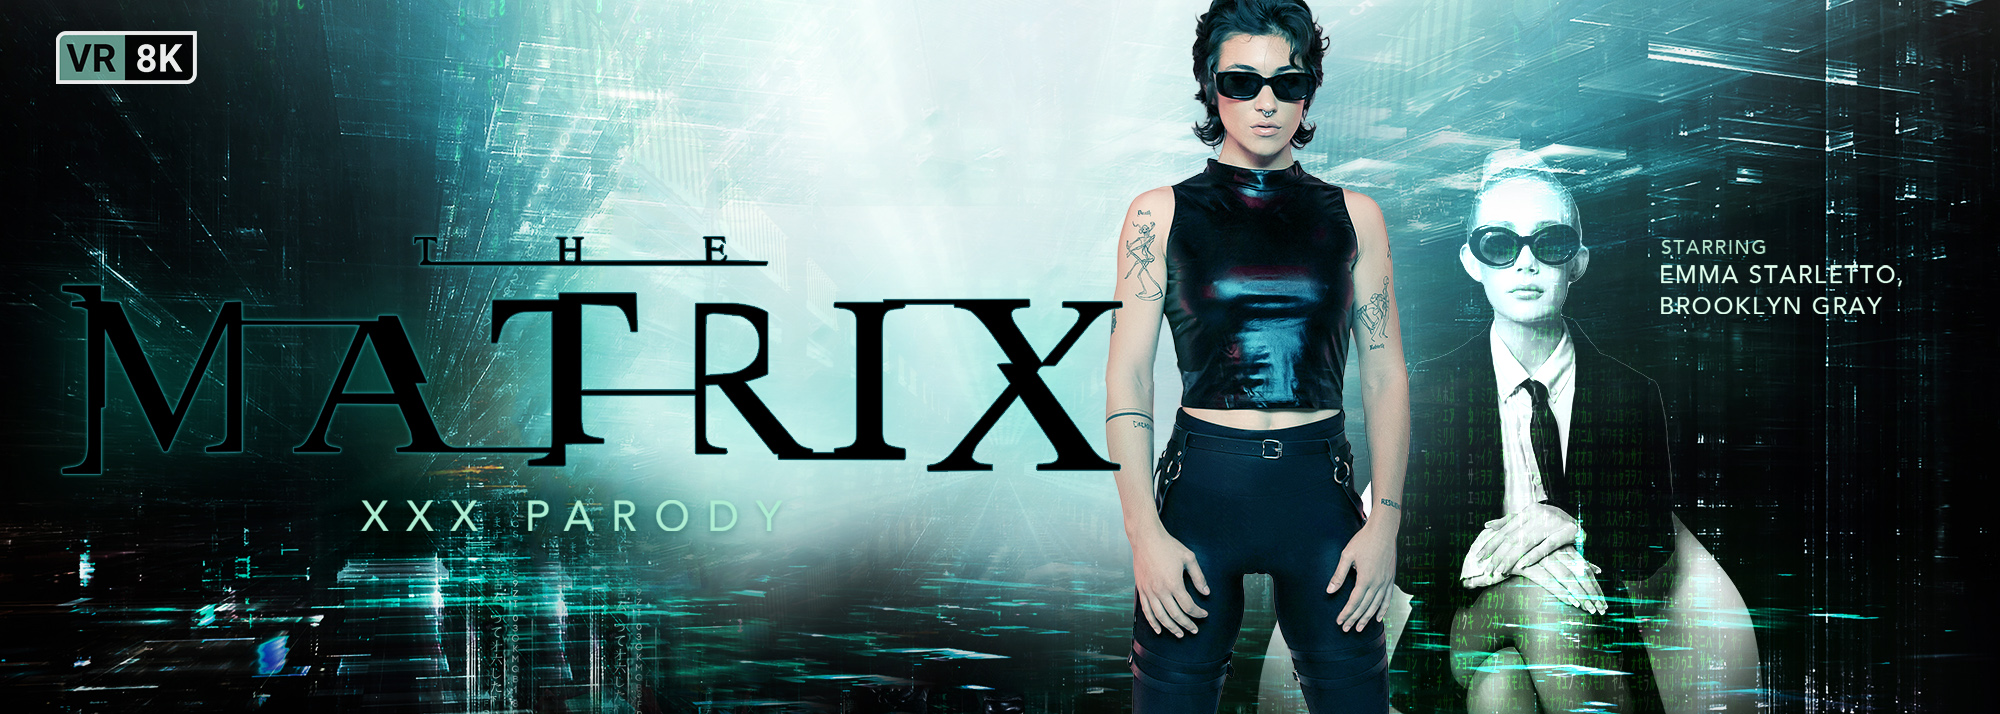 The Matrix (A XXX Parody) - VR Porn Video, Starring Emma Starletto VR, Brooklyn Gray VR